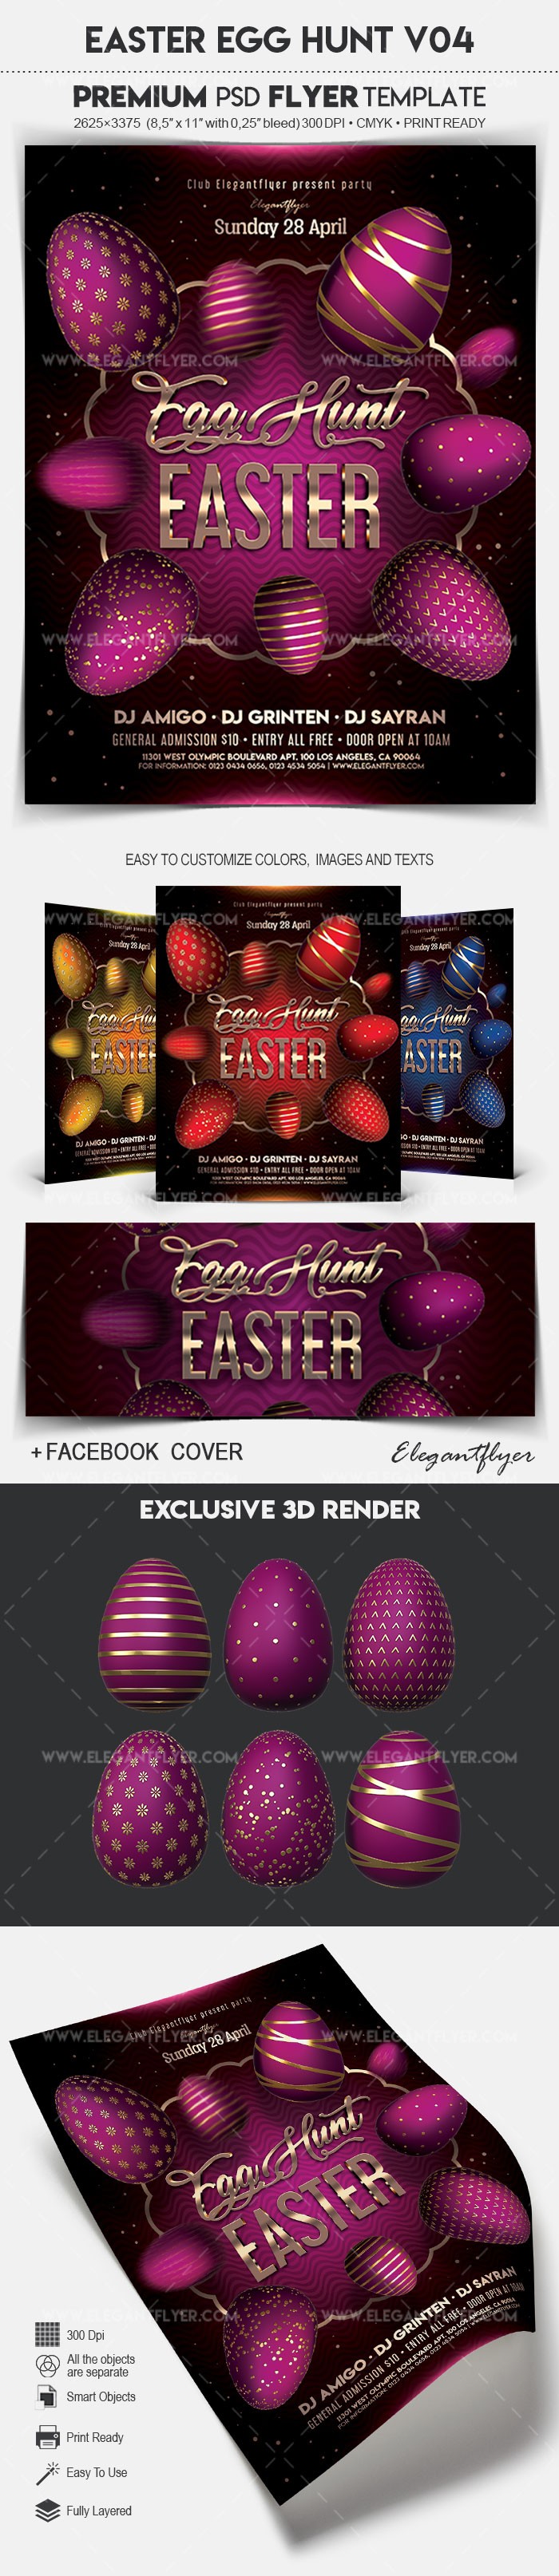 Easter Egg Hunt V04 by ElegantFlyer